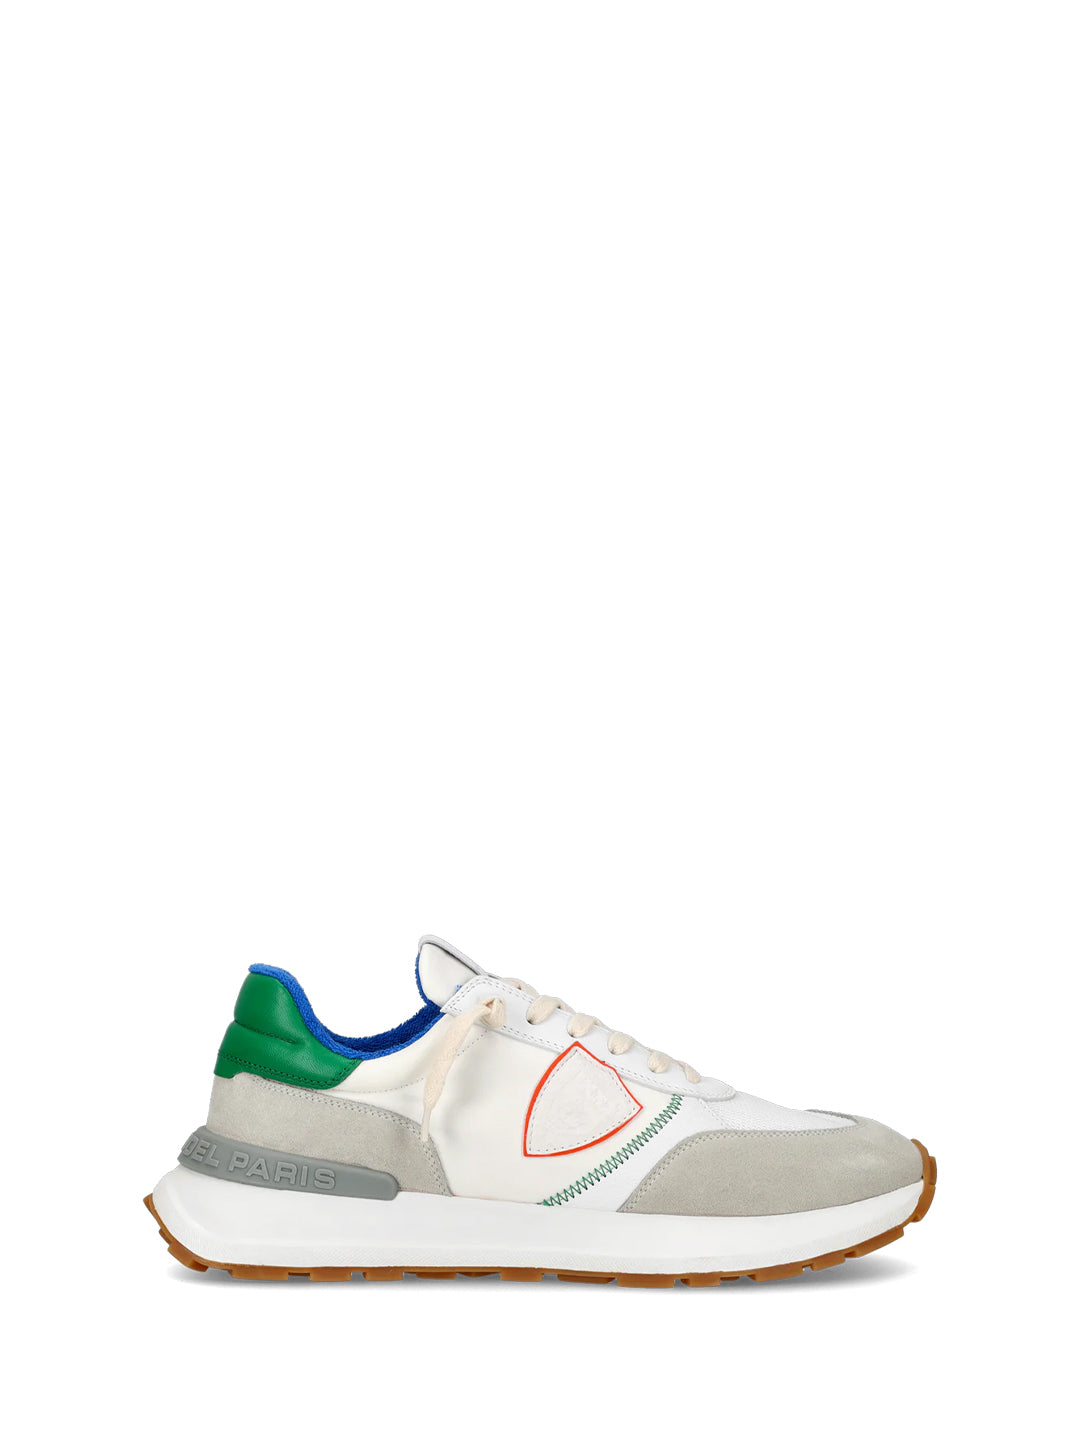 Philippe Model Antibes sneakers bianco con tab verde